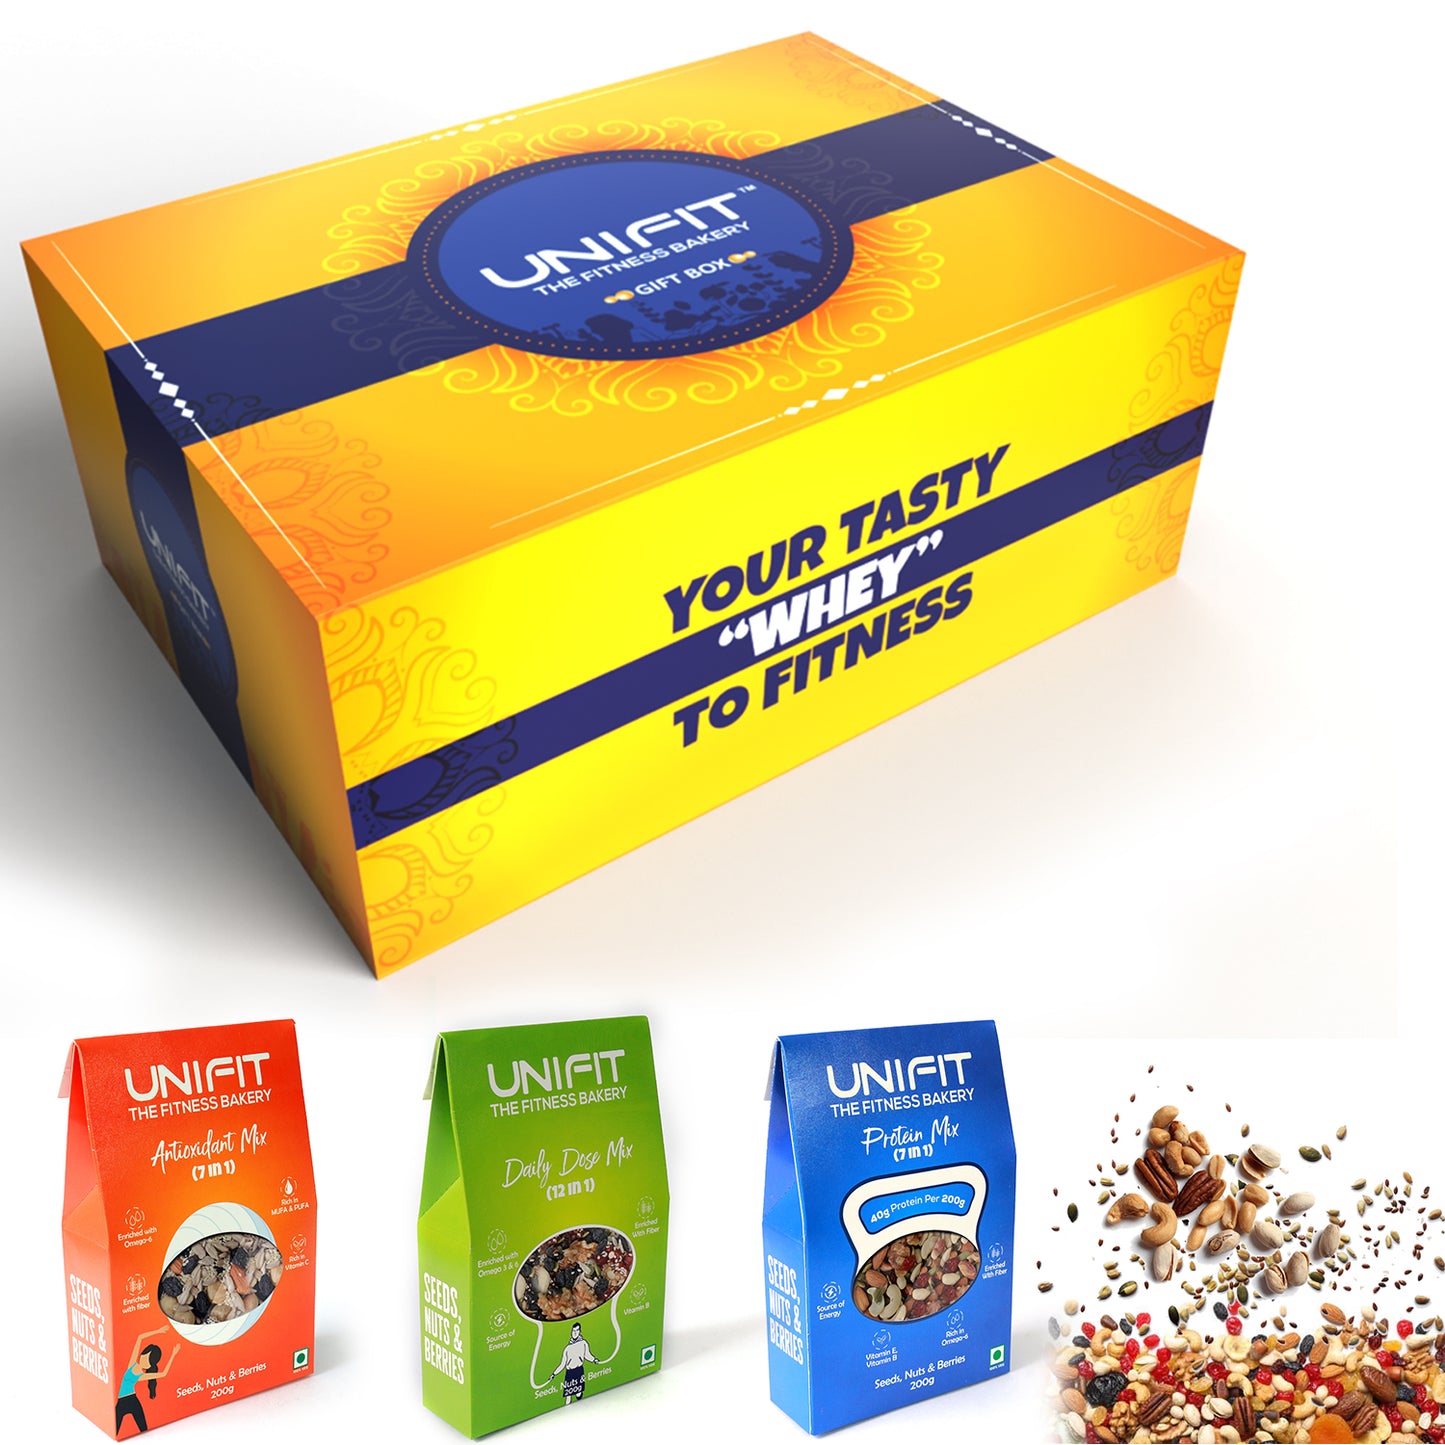 Unifit Healthly Gift Hamper (UNIFIT Diwali Gift Hamper, Mixed Dry Fruits)